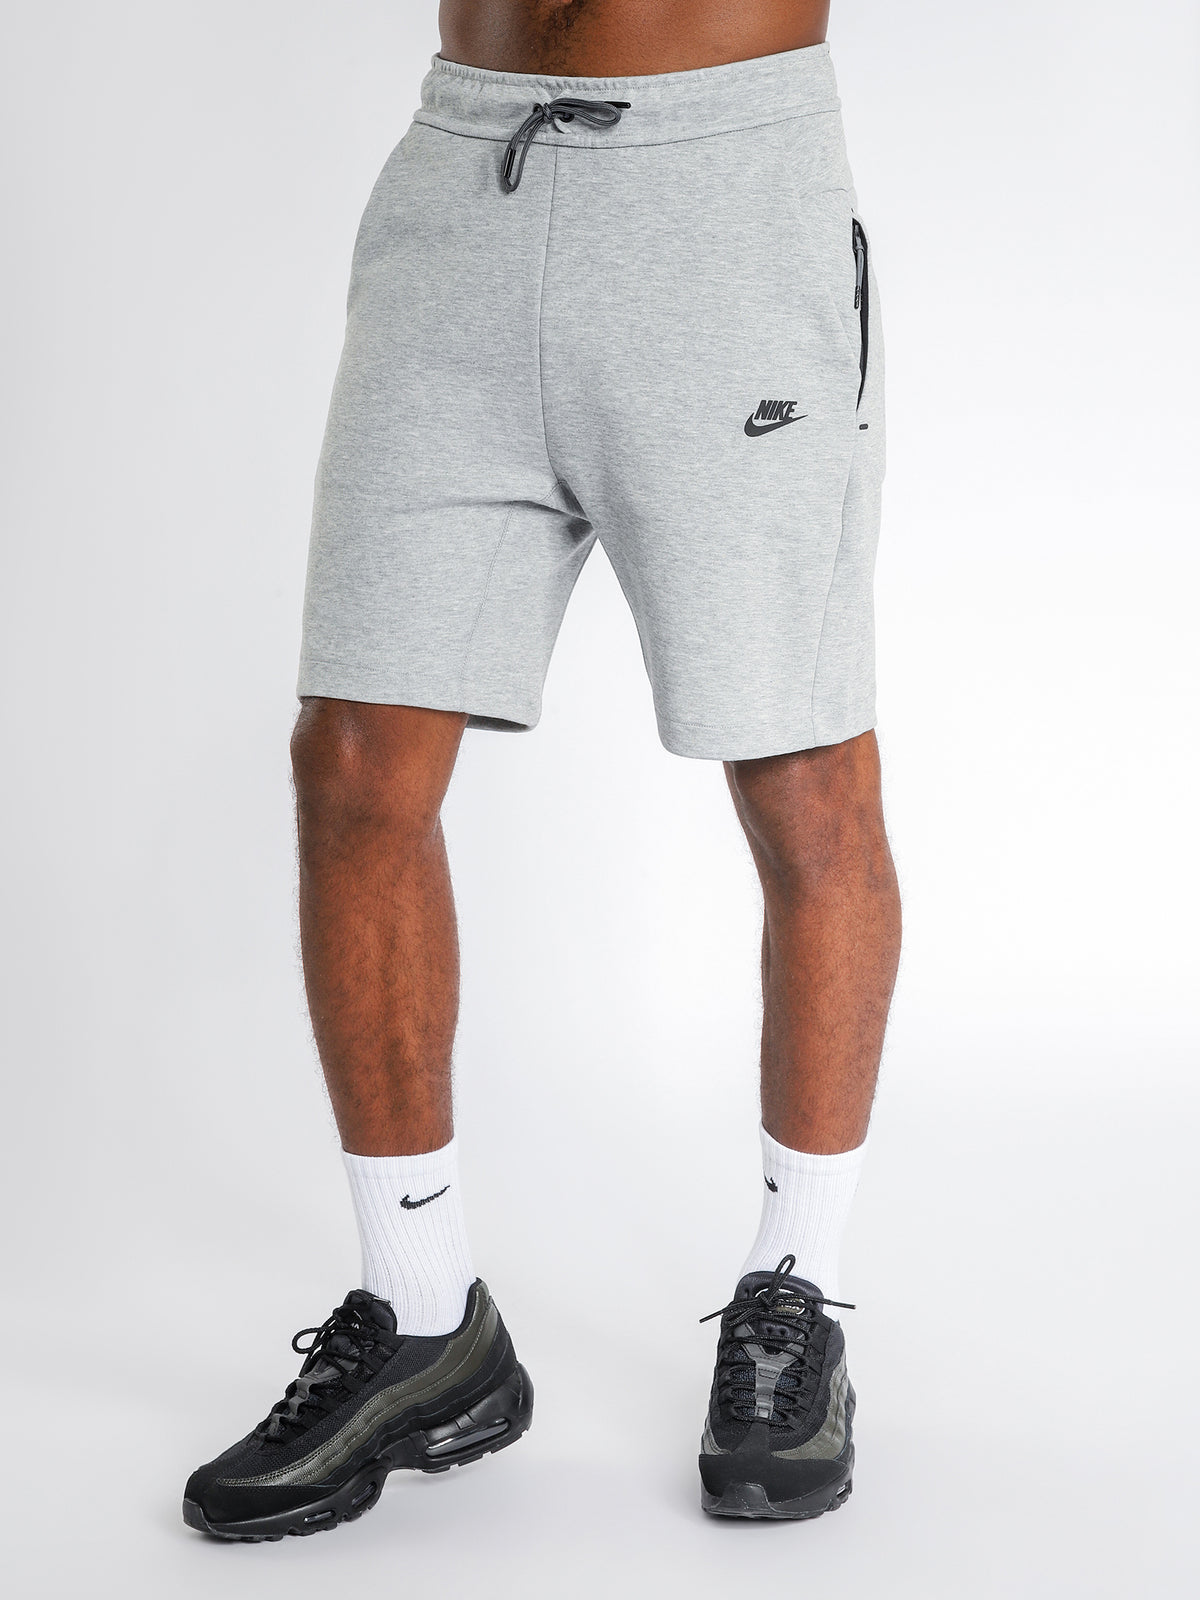 Tech Fleece Shorts in Grey